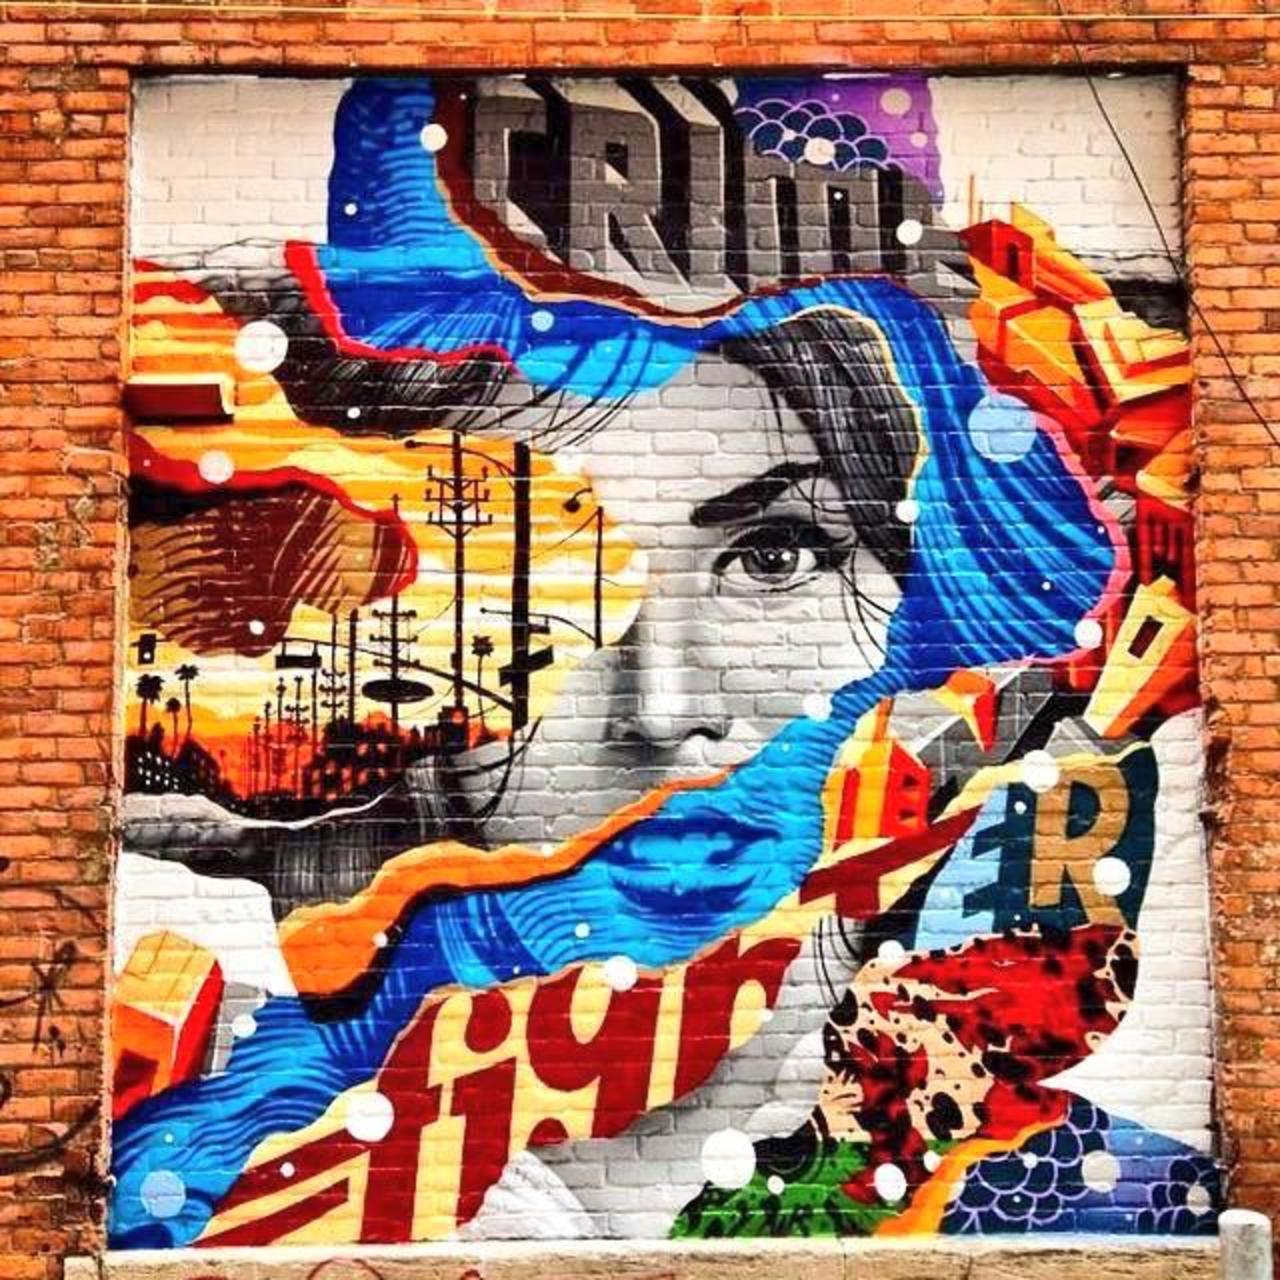 RT @Pitchuskita: Tristan Eaton / "Crime Fighter"
Detroit

#streetart #art #graffiti #mural http://t.co/odteJZADS5